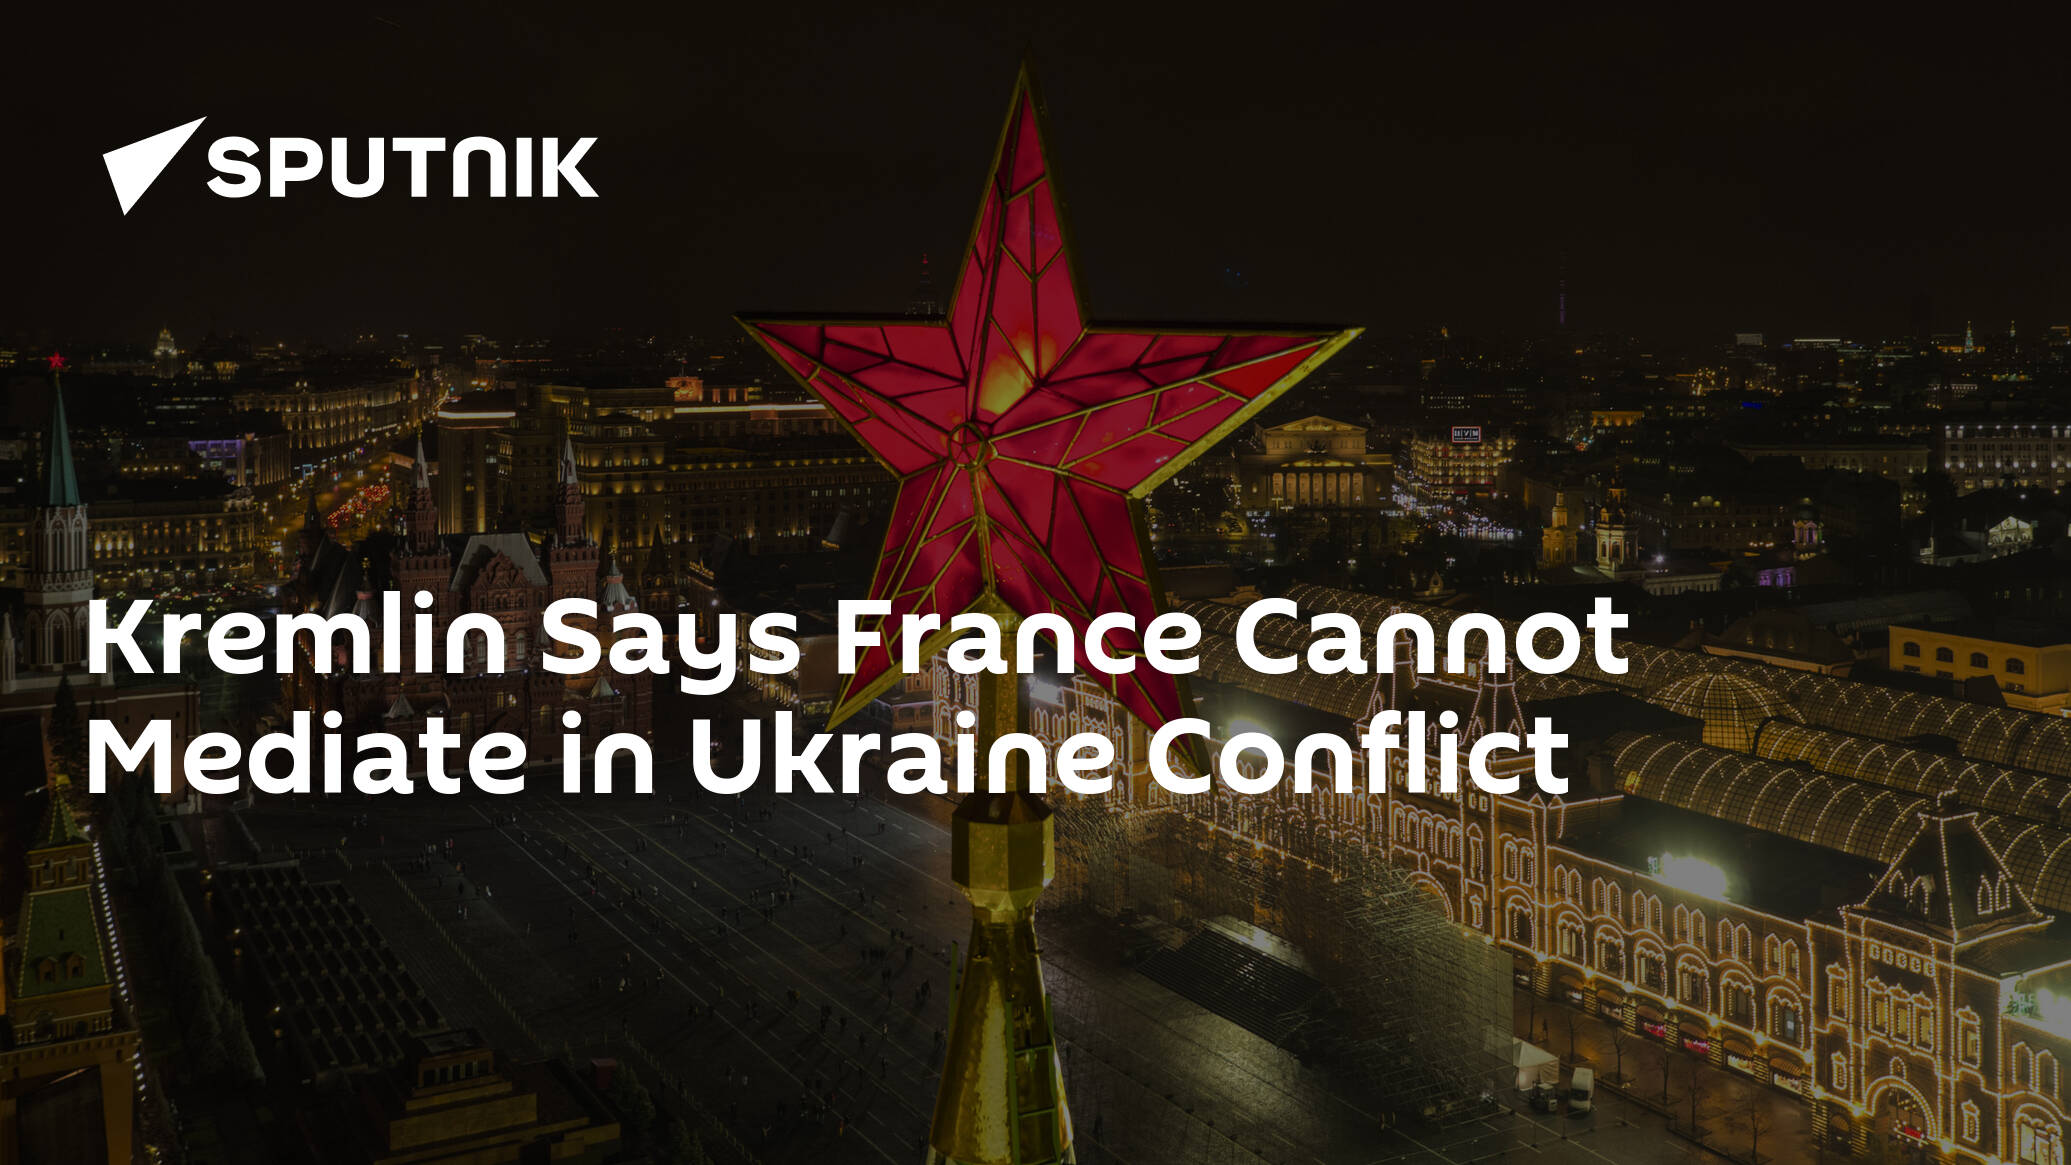 Kremlin Says France Cannot Mediate in Ukraine Conflict